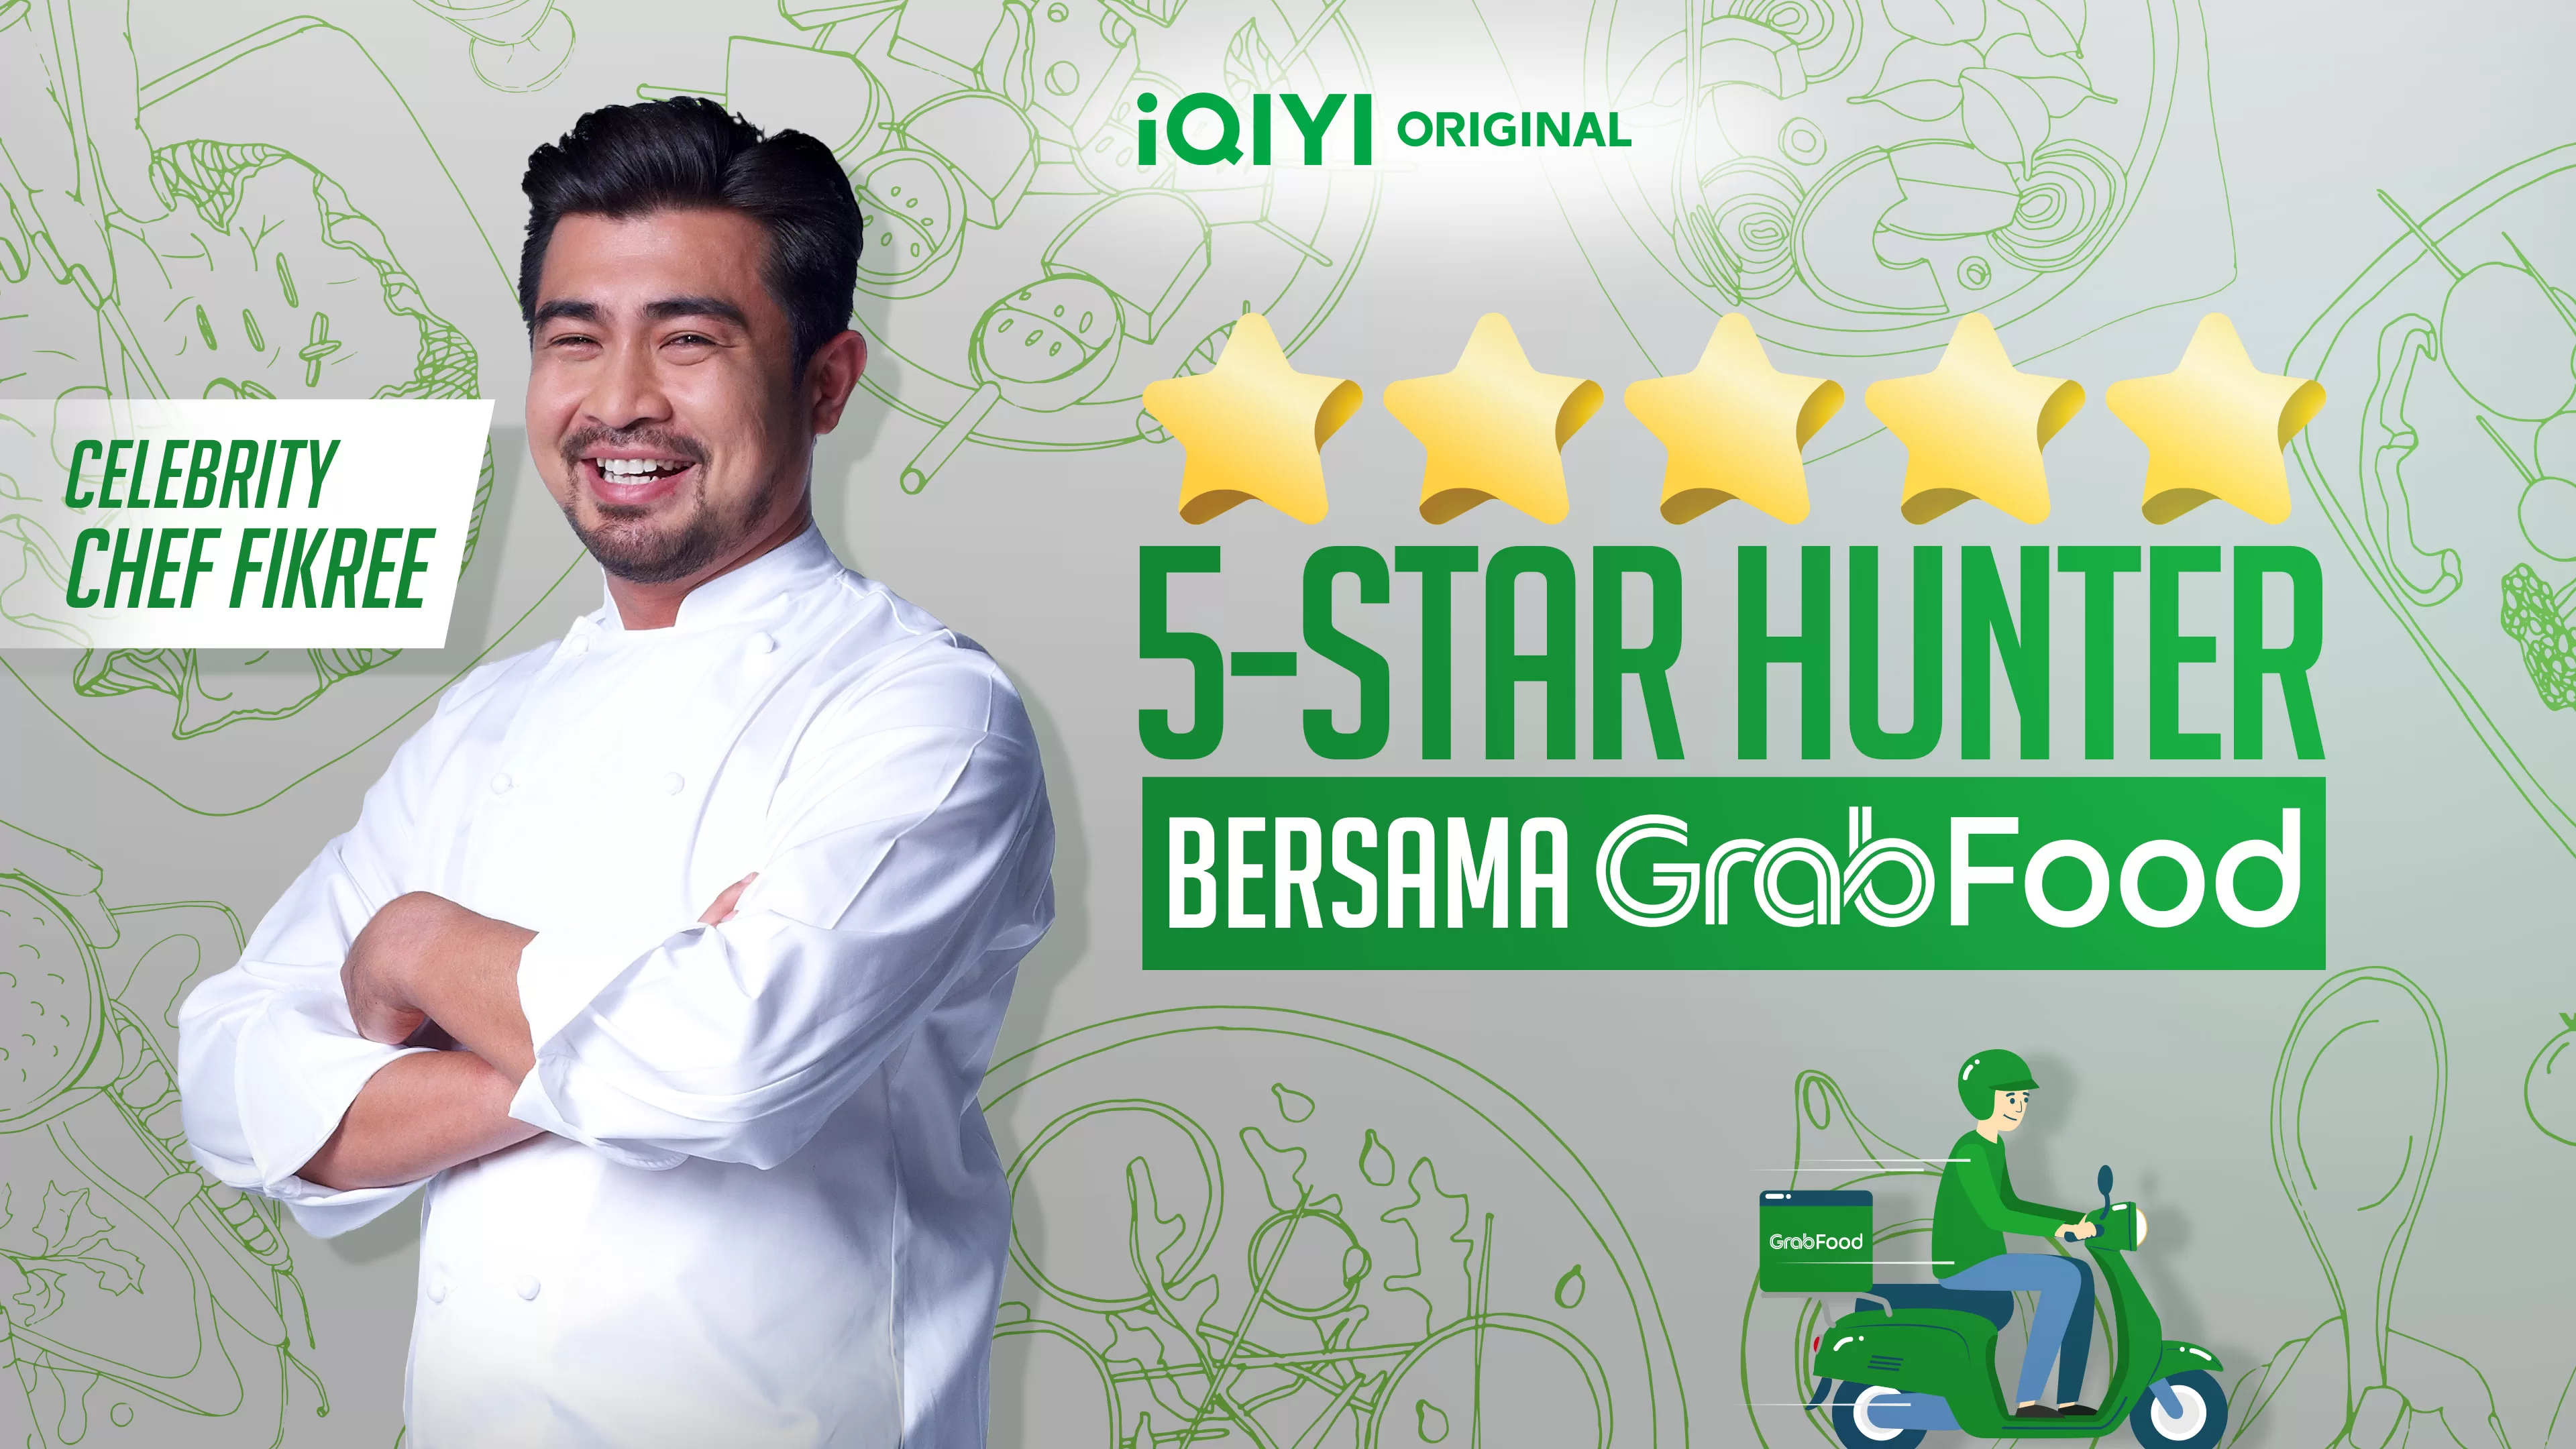 iQIYI partners GrabFood Malaysia to launch first ever branded variety show 5 Star Hunter Bersama GrabFood